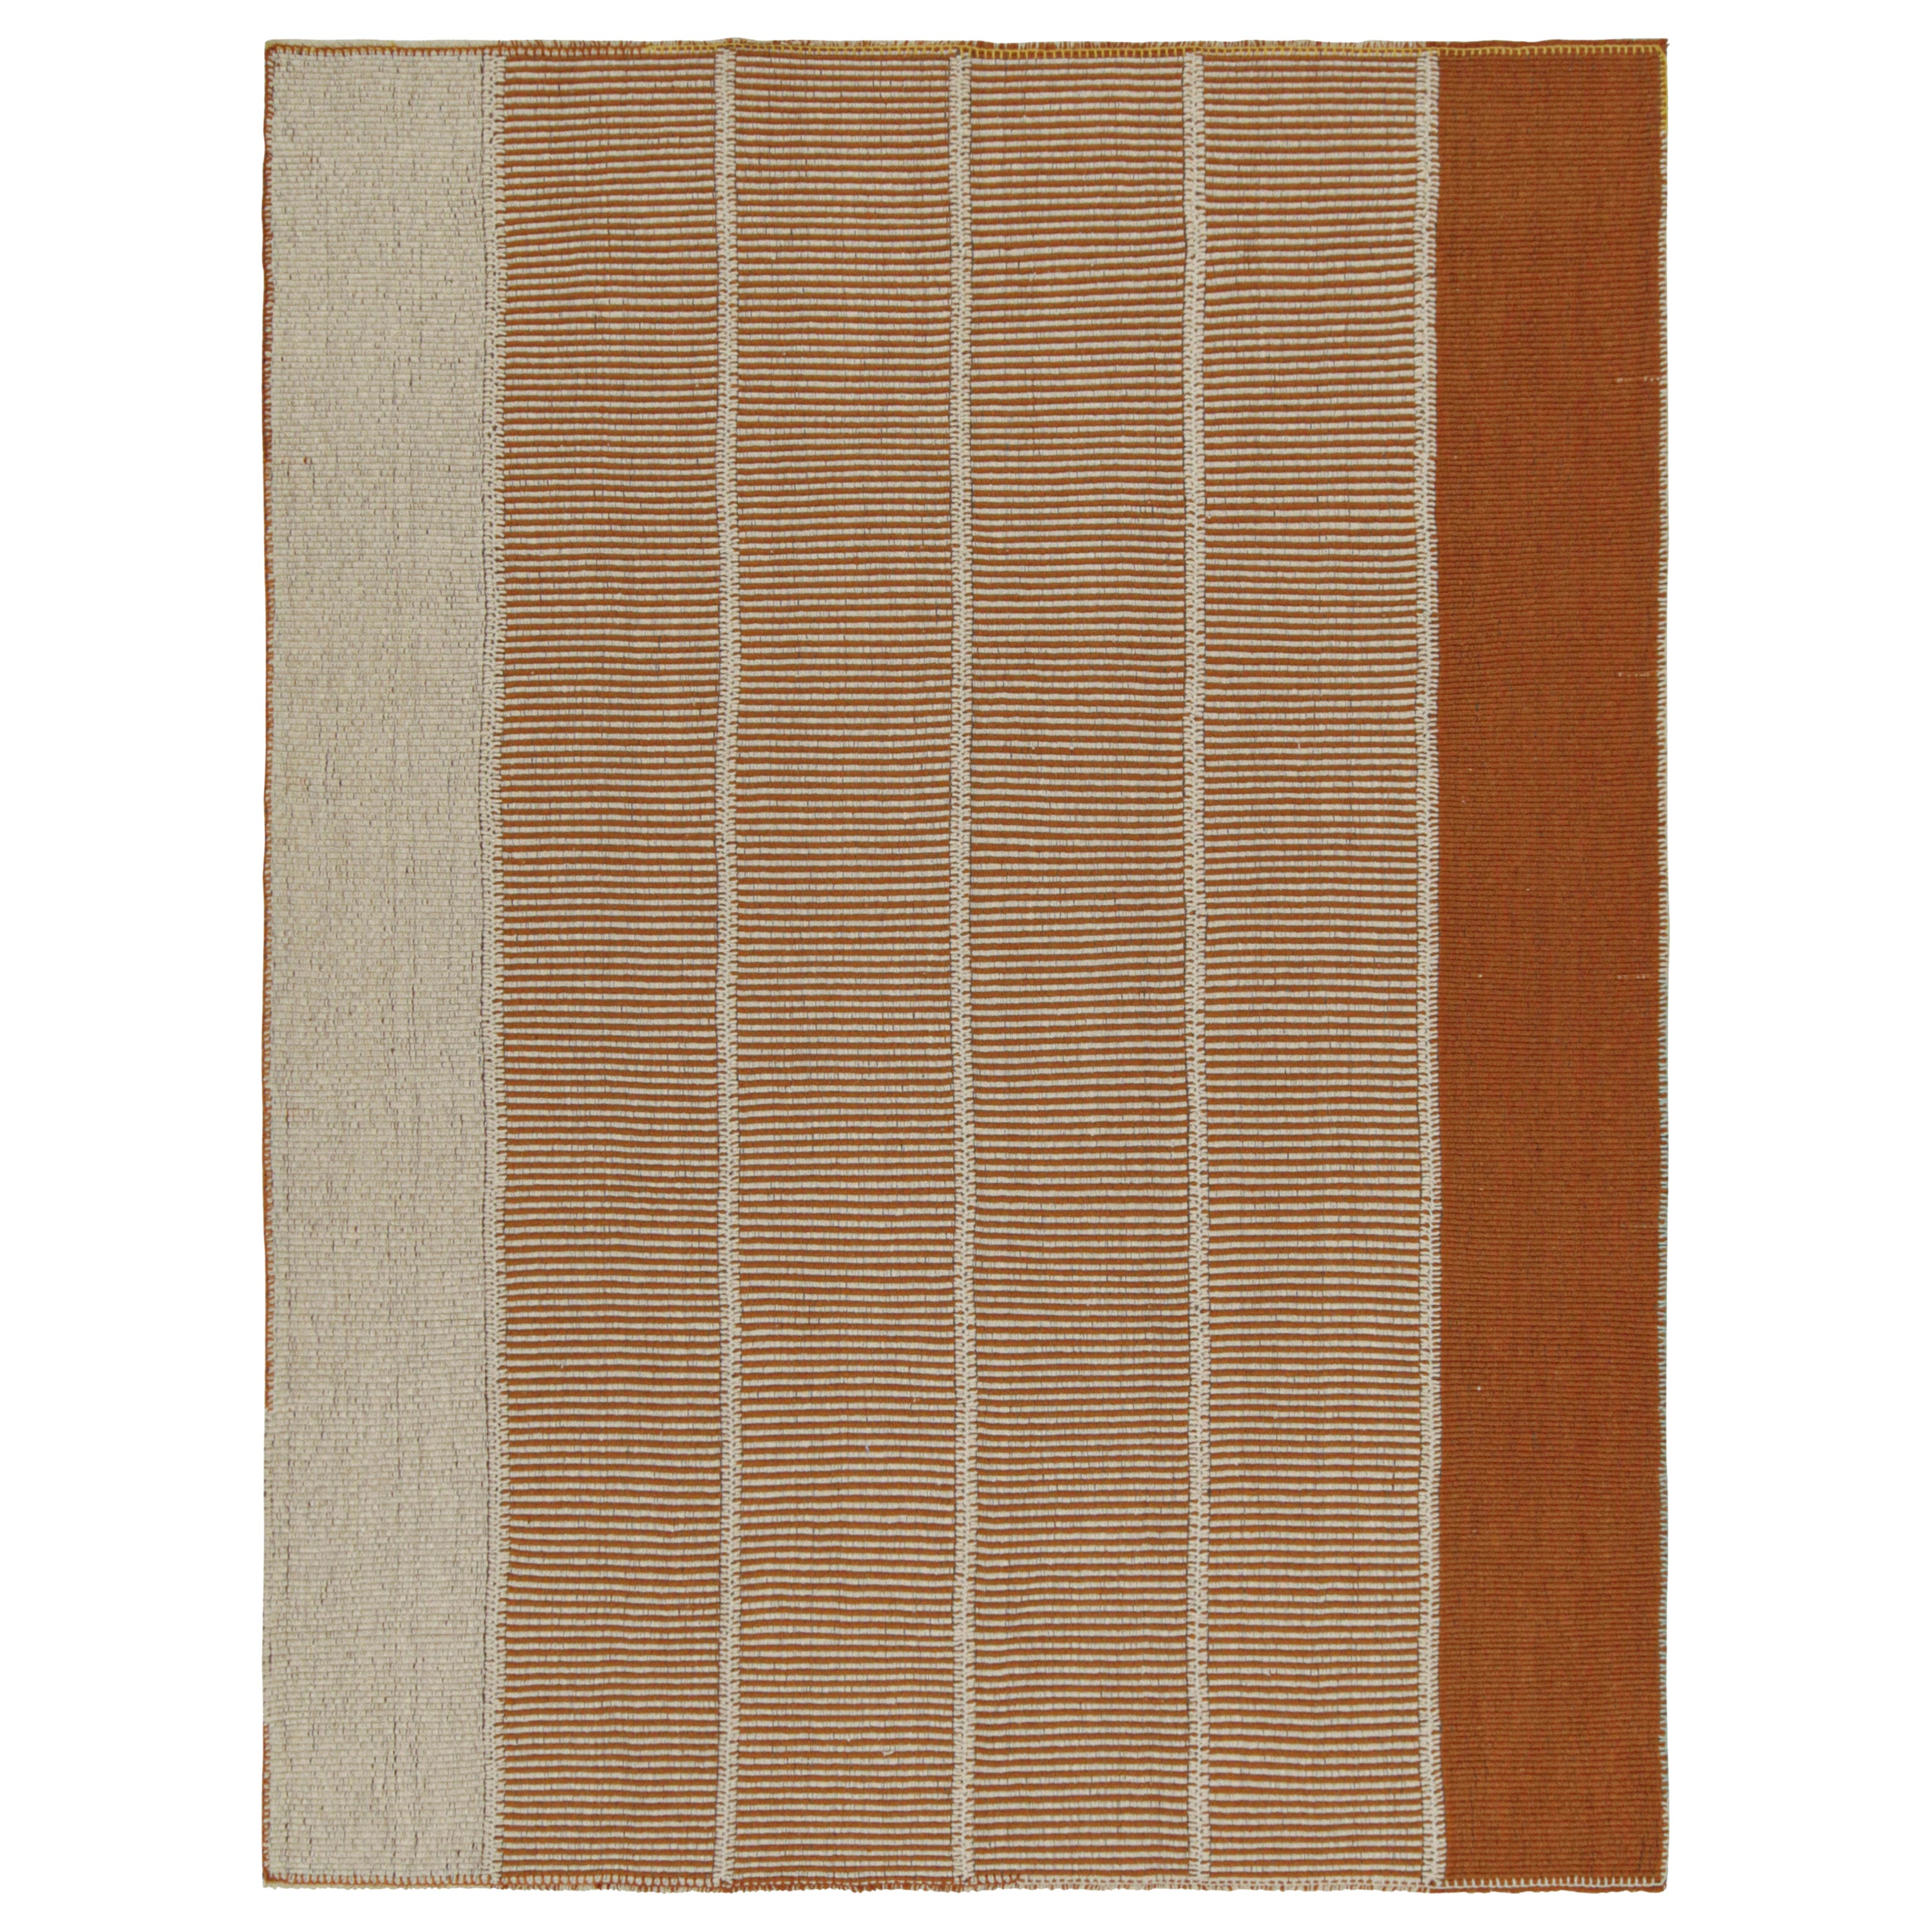 Rug & Kilim’s Contemporary Kilim in Orange & Cream Stripes